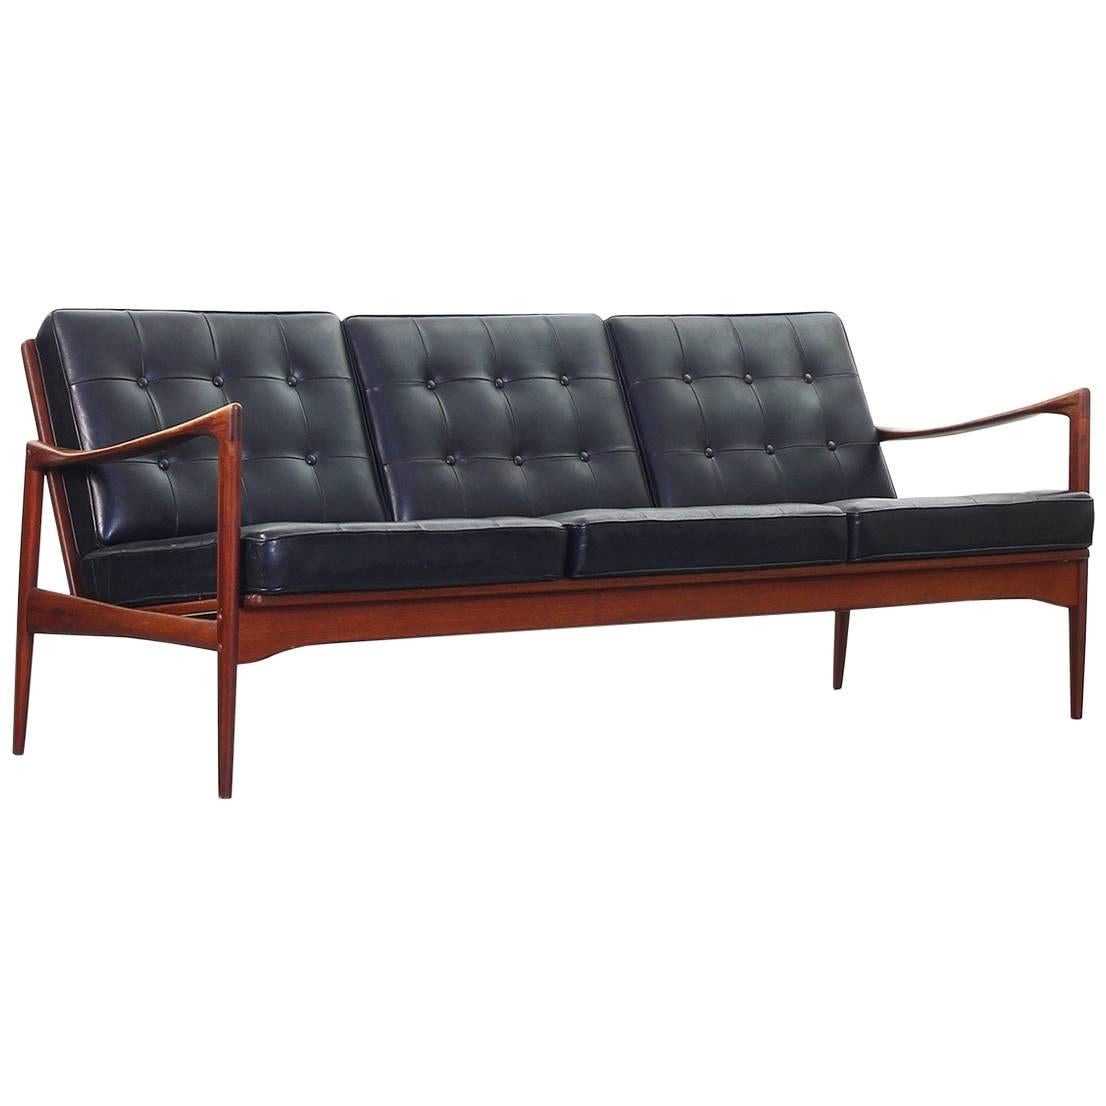 Sofa Model Kandidaten Designed by Ib Kofod-Larsen for Ope Mobler